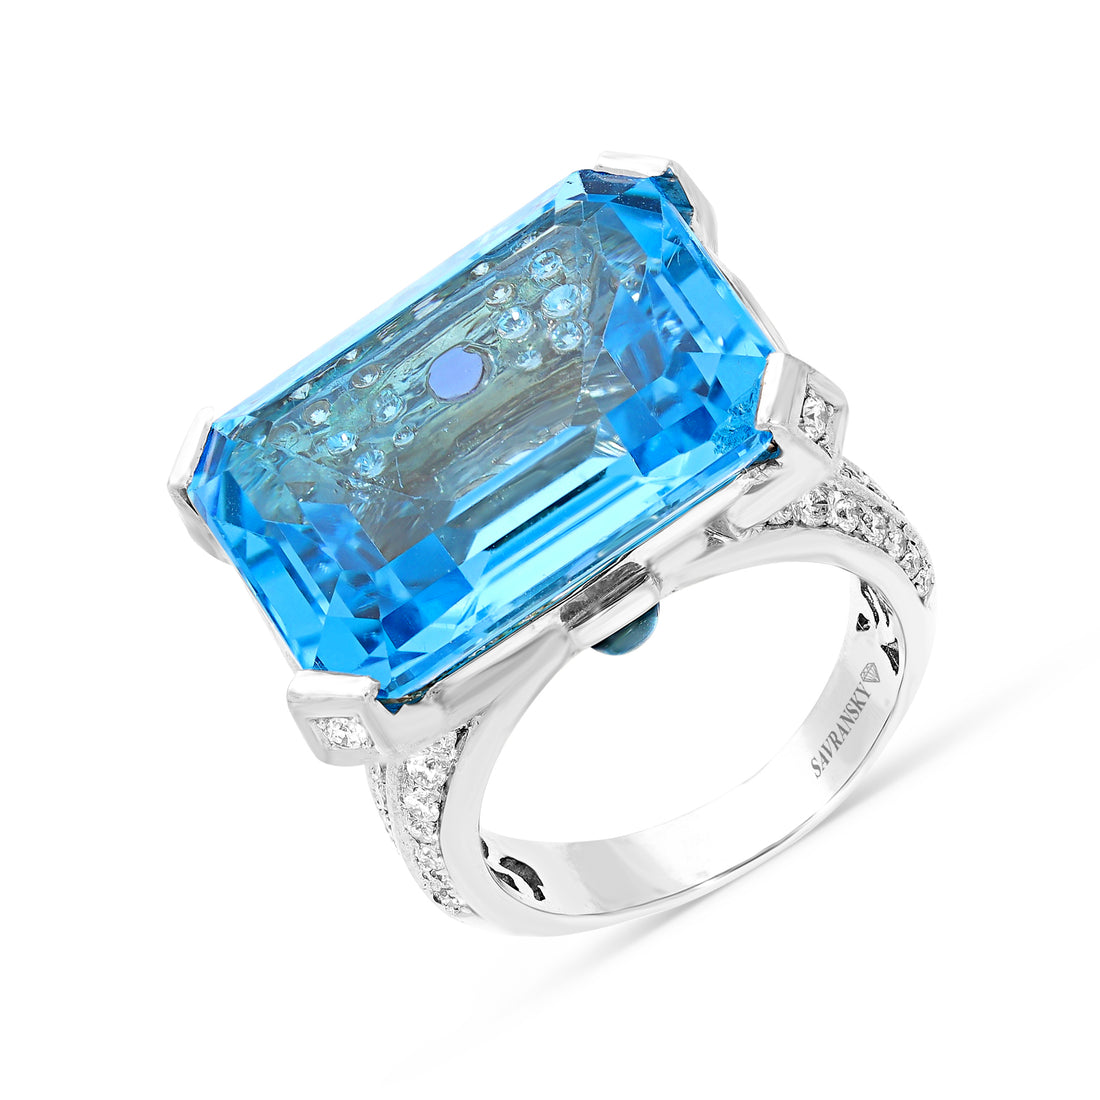 Emerald Cut Blue Topaz Extraordinary Ring - 26.65 Carat